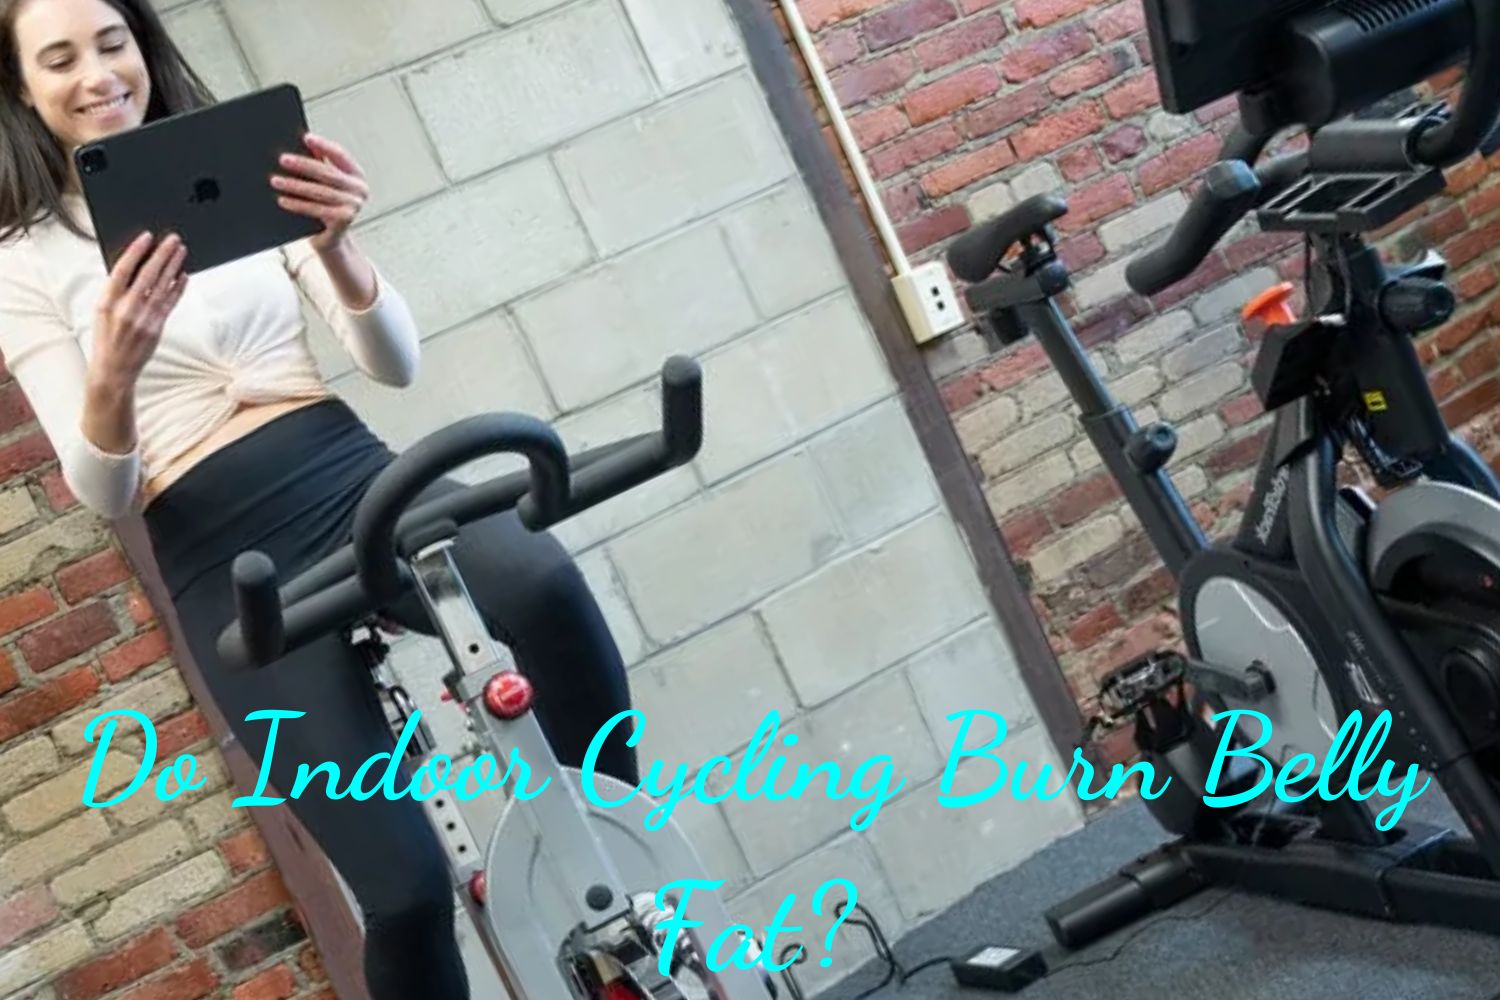 do cycling burn belly fat?